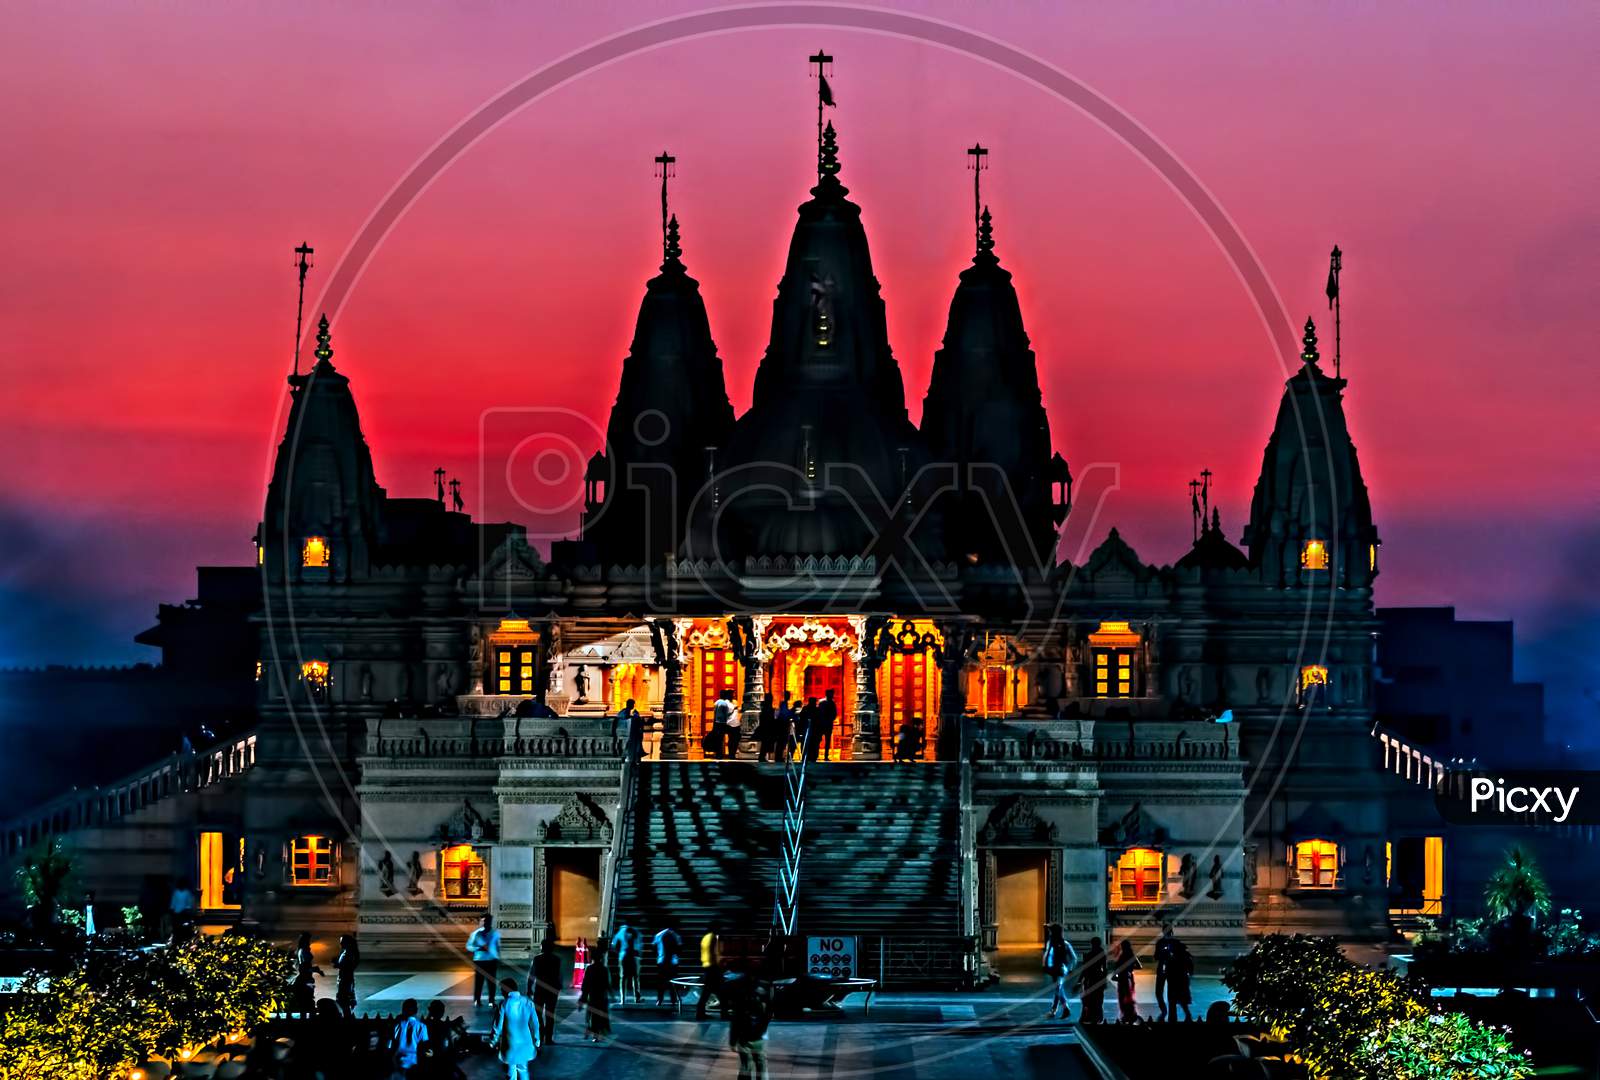 Silhoutte Image Of Shree Swaminarayan Temple On Orange Sky Backg